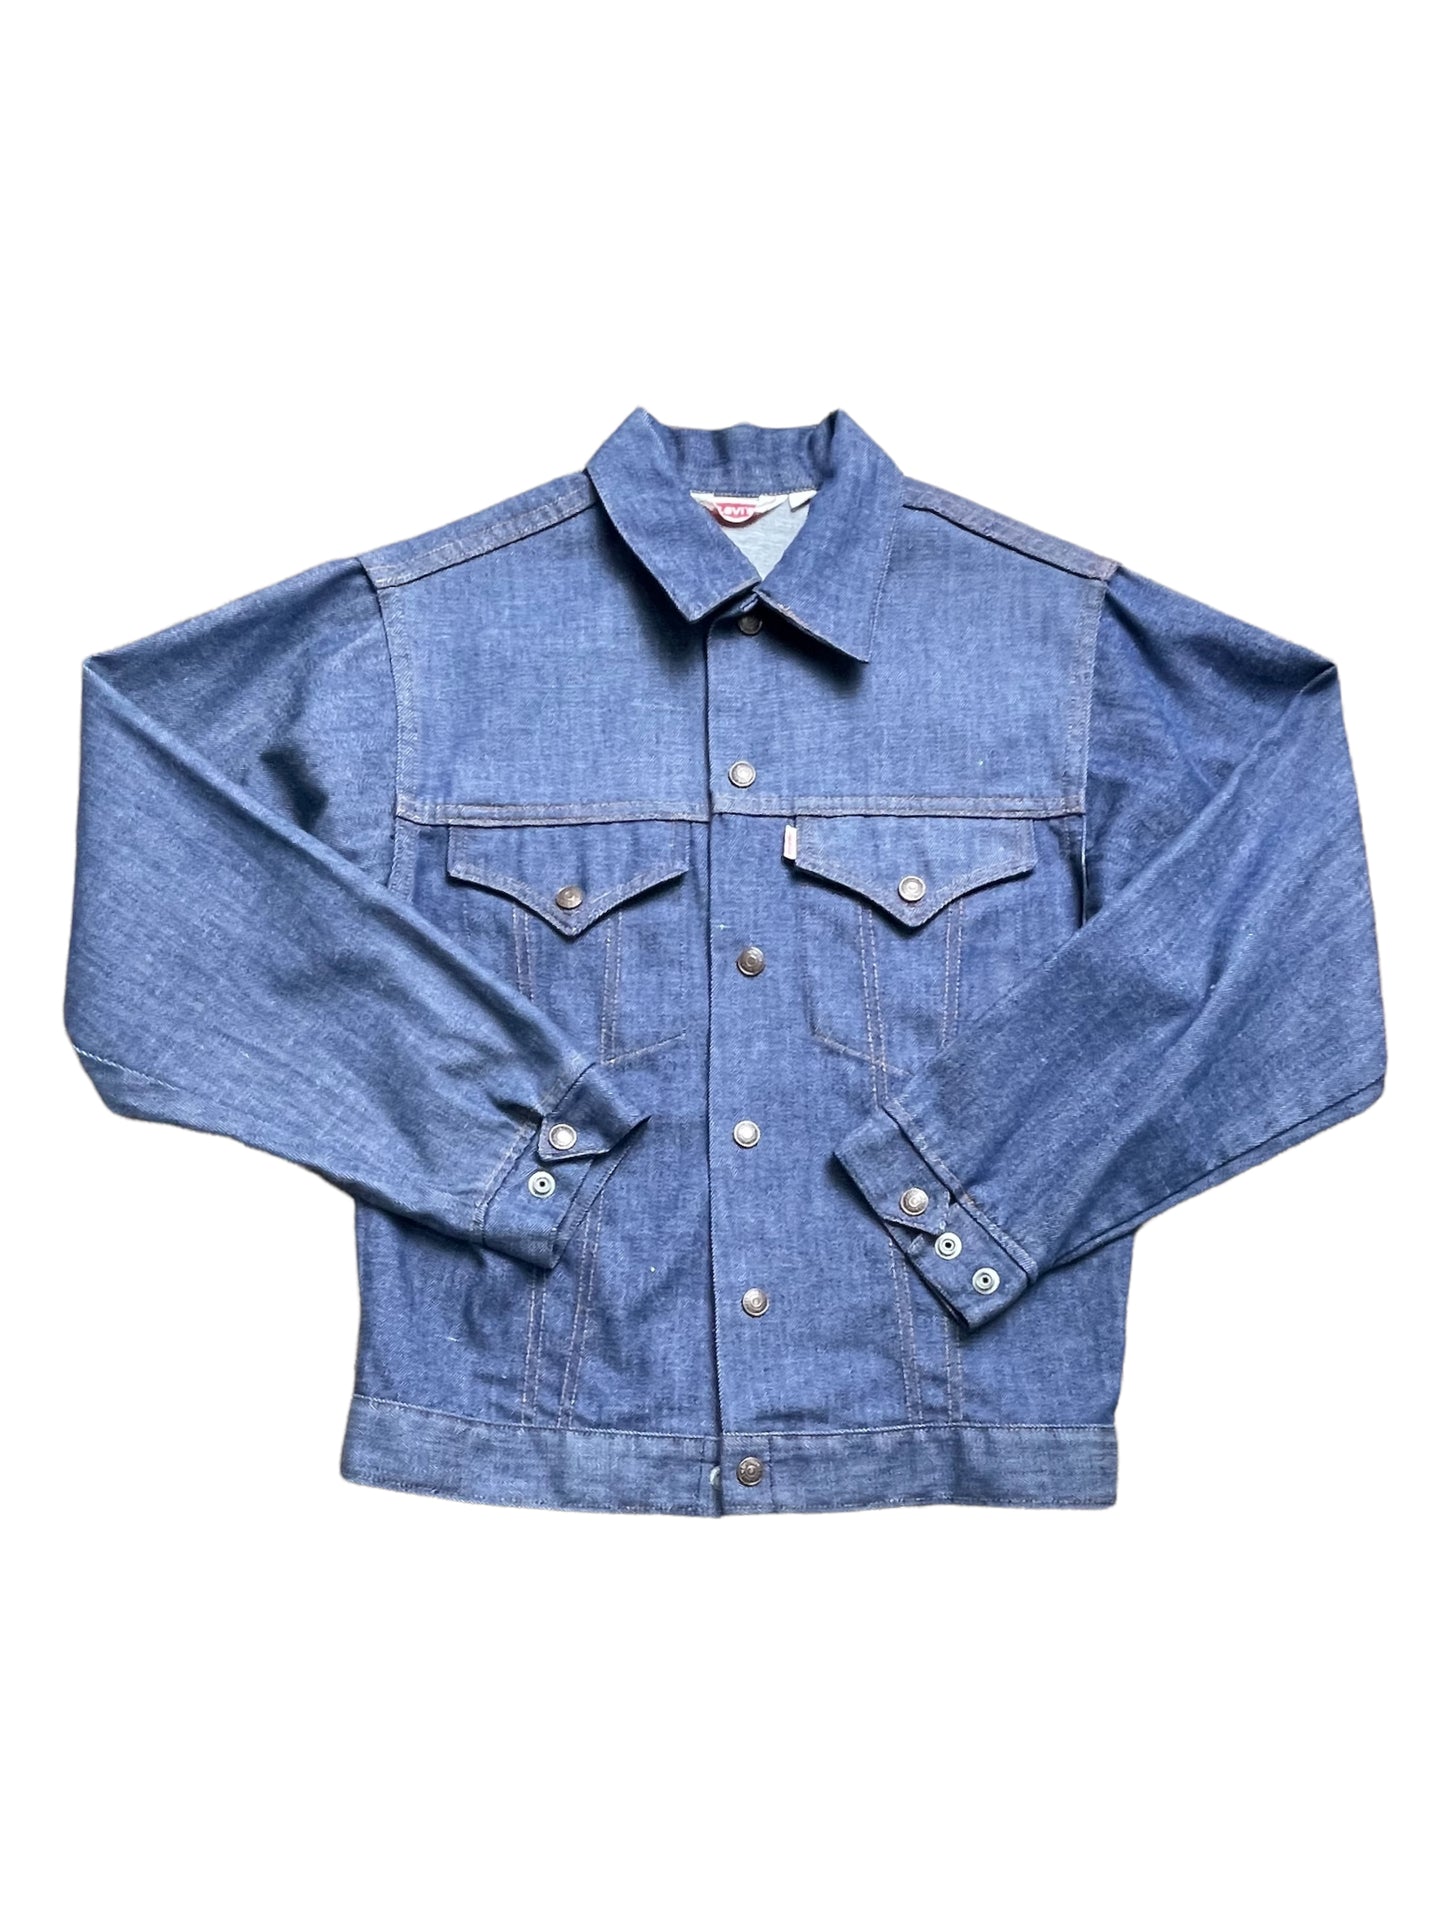 Vintage 60s Levi’s “Big E” Denim Jacket Small